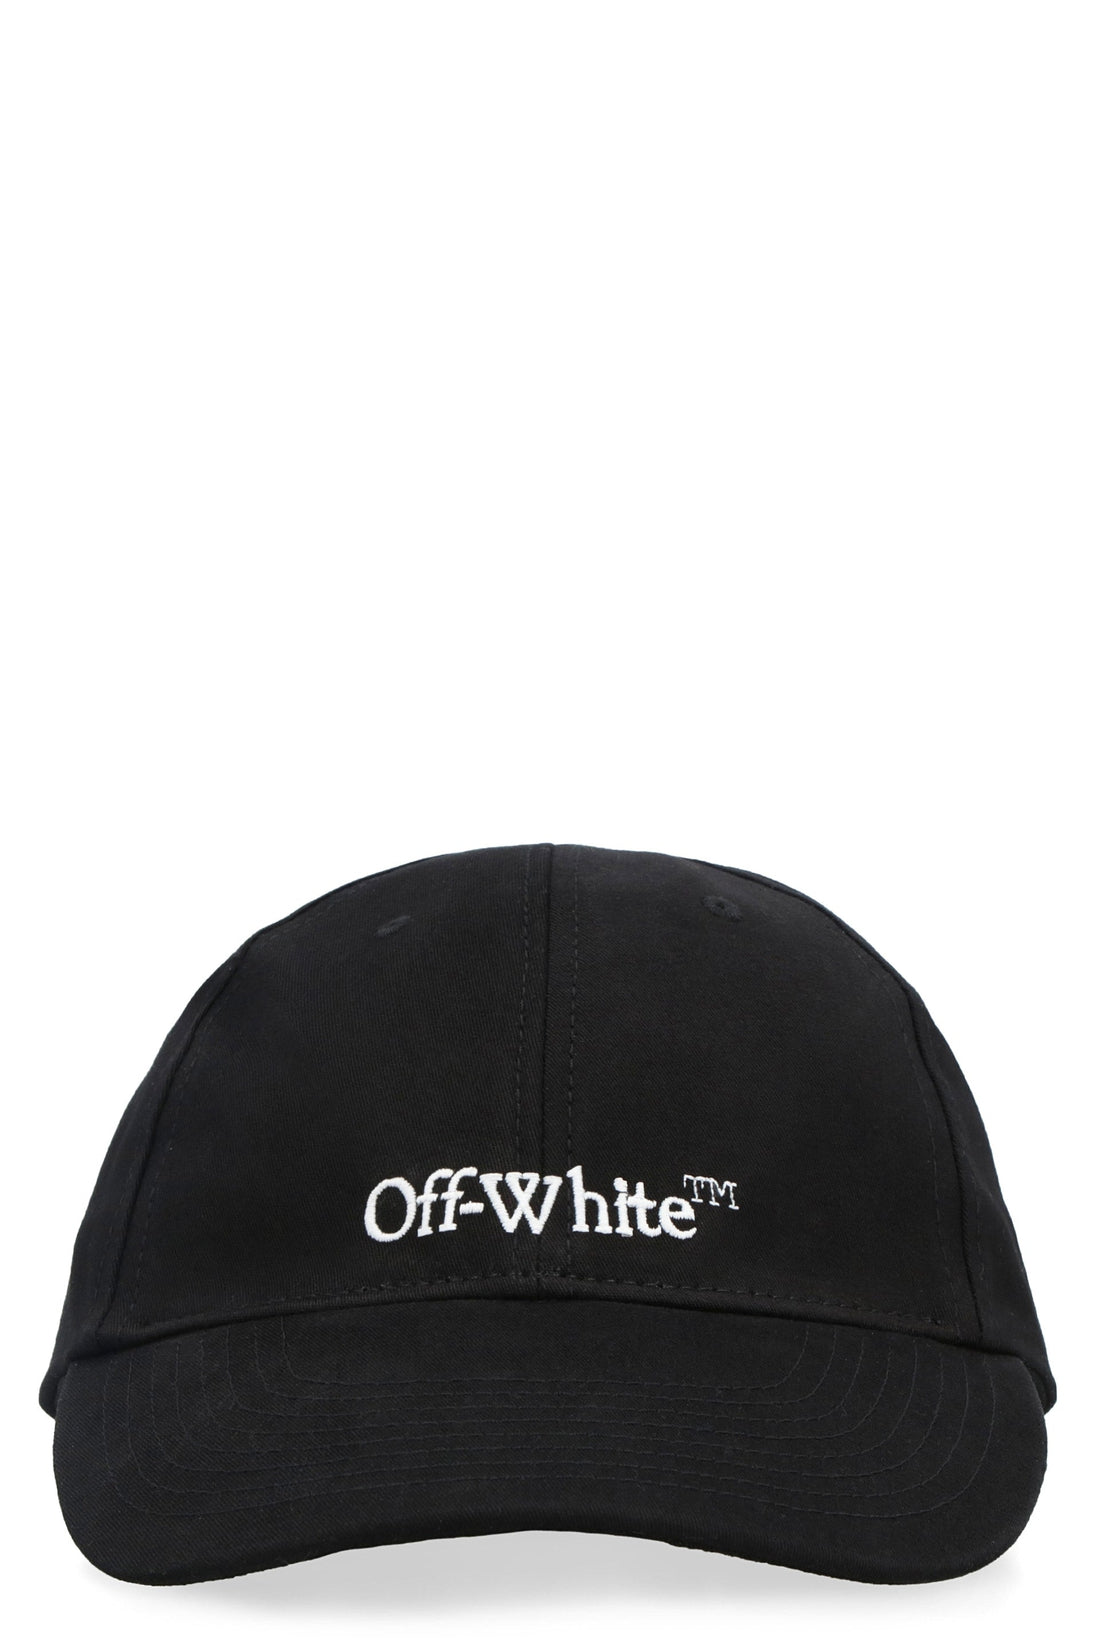 Off-White-OUTLET-SALE-Baseball cap-ARCHIVIST